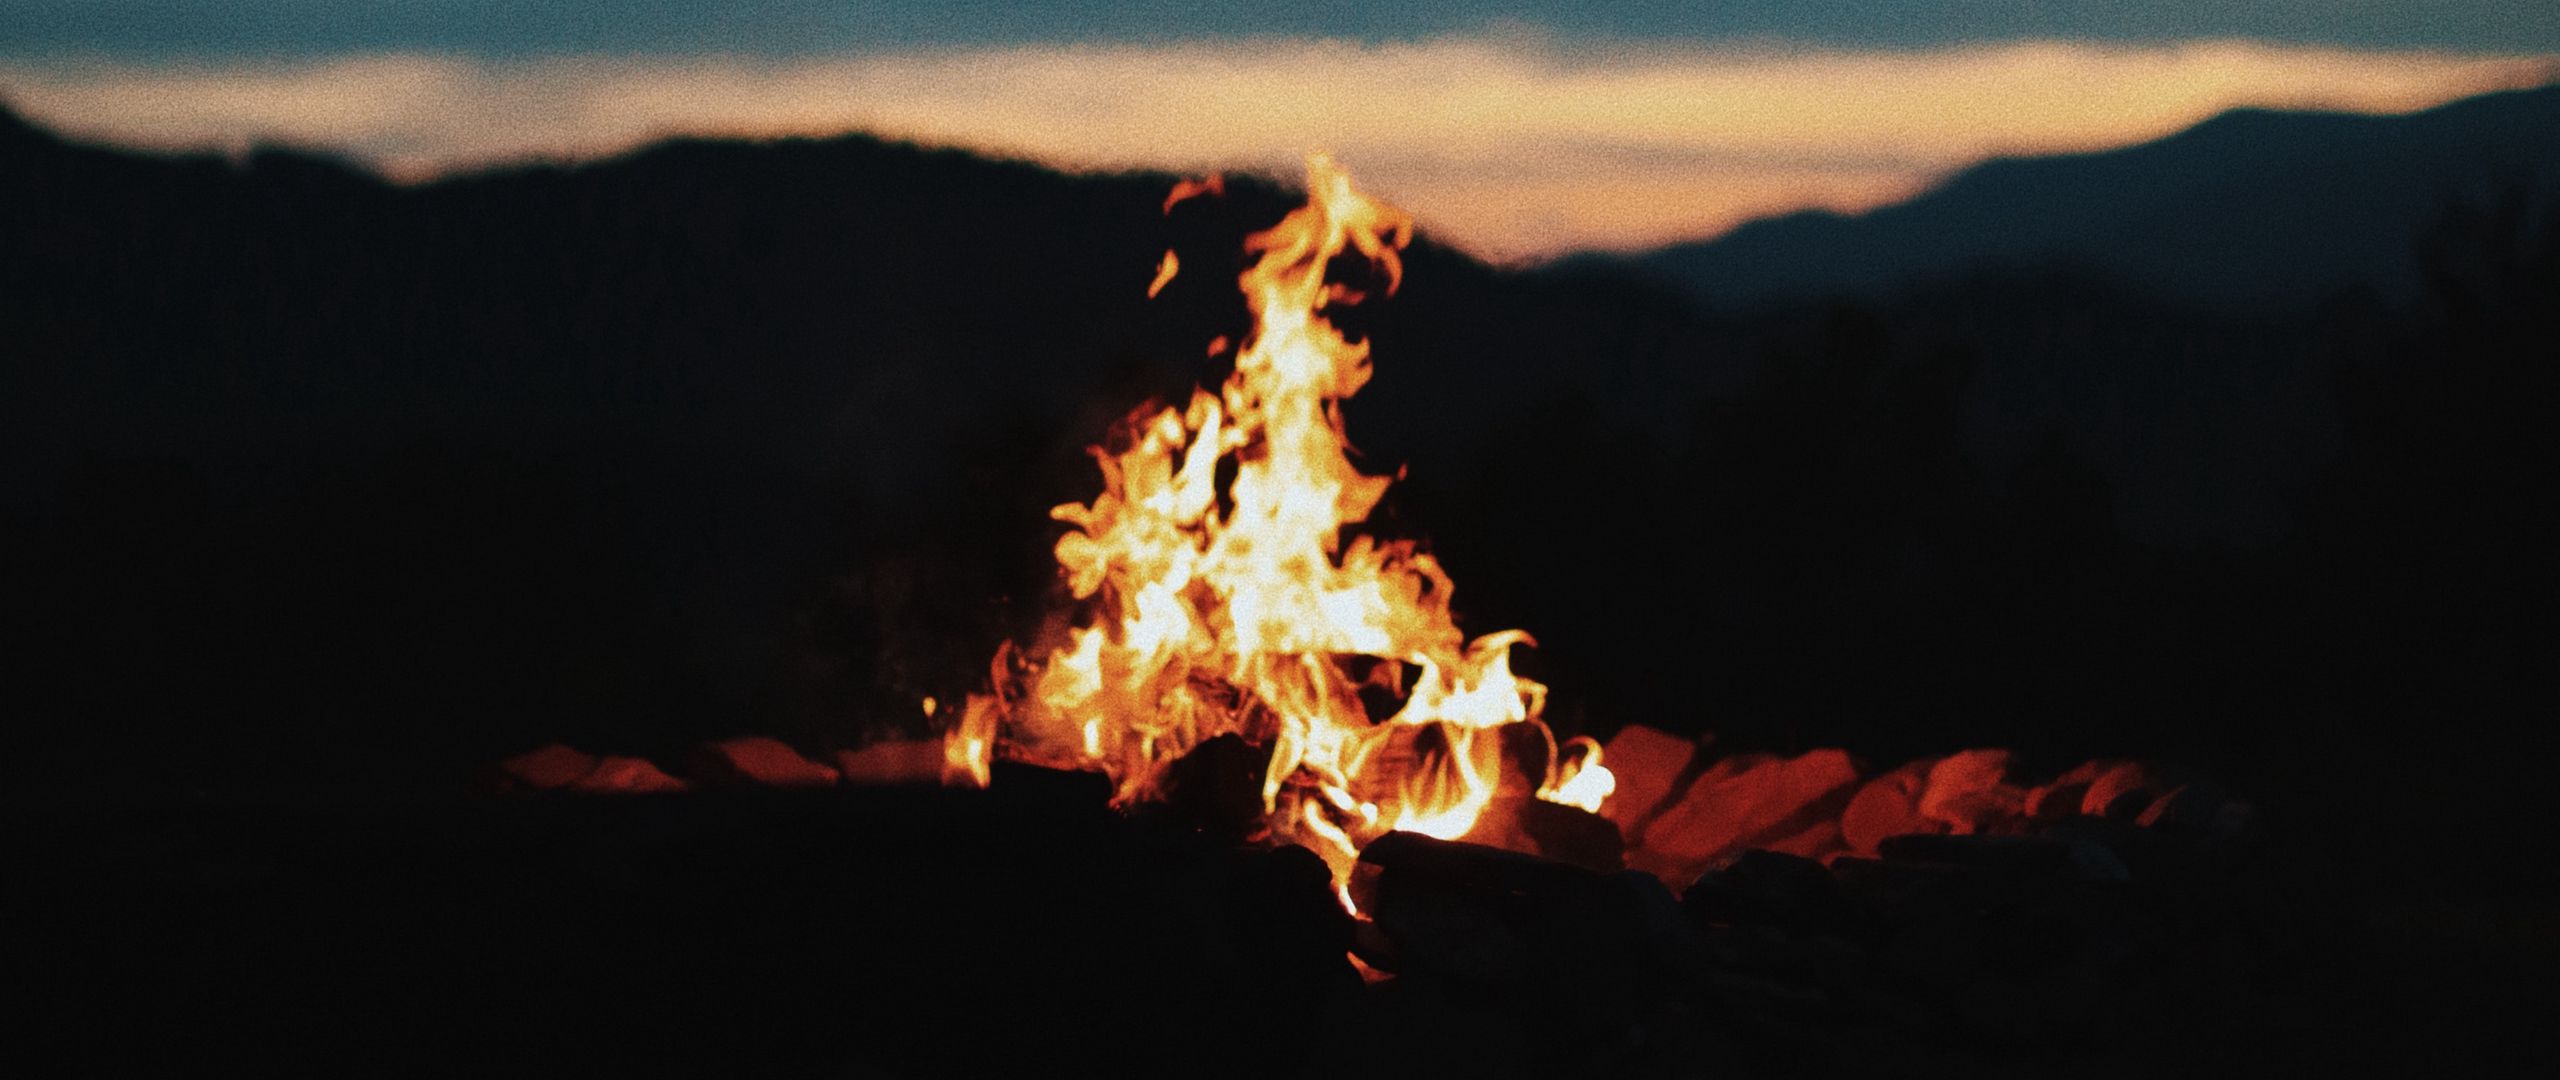 Download wallpaper 2560x1080 bonfire, fire, flame, dusk, dark dual wide  1080p hd background